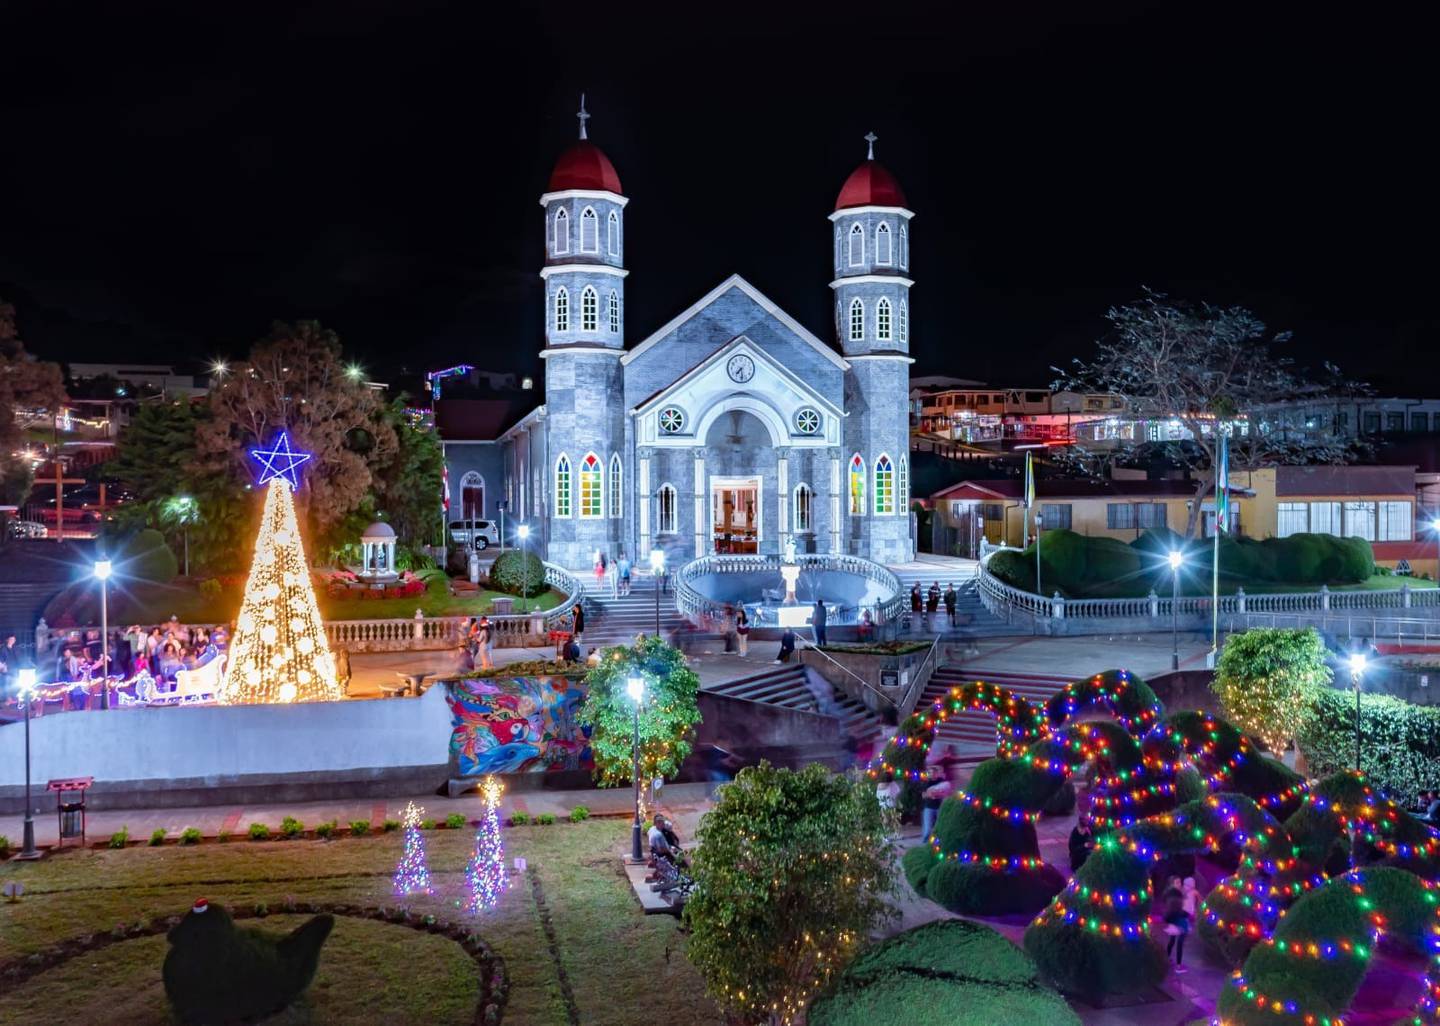 30 mil luces iluminarán al Parque de Zarcero esta Navidad. (Foto Javier Méndez)